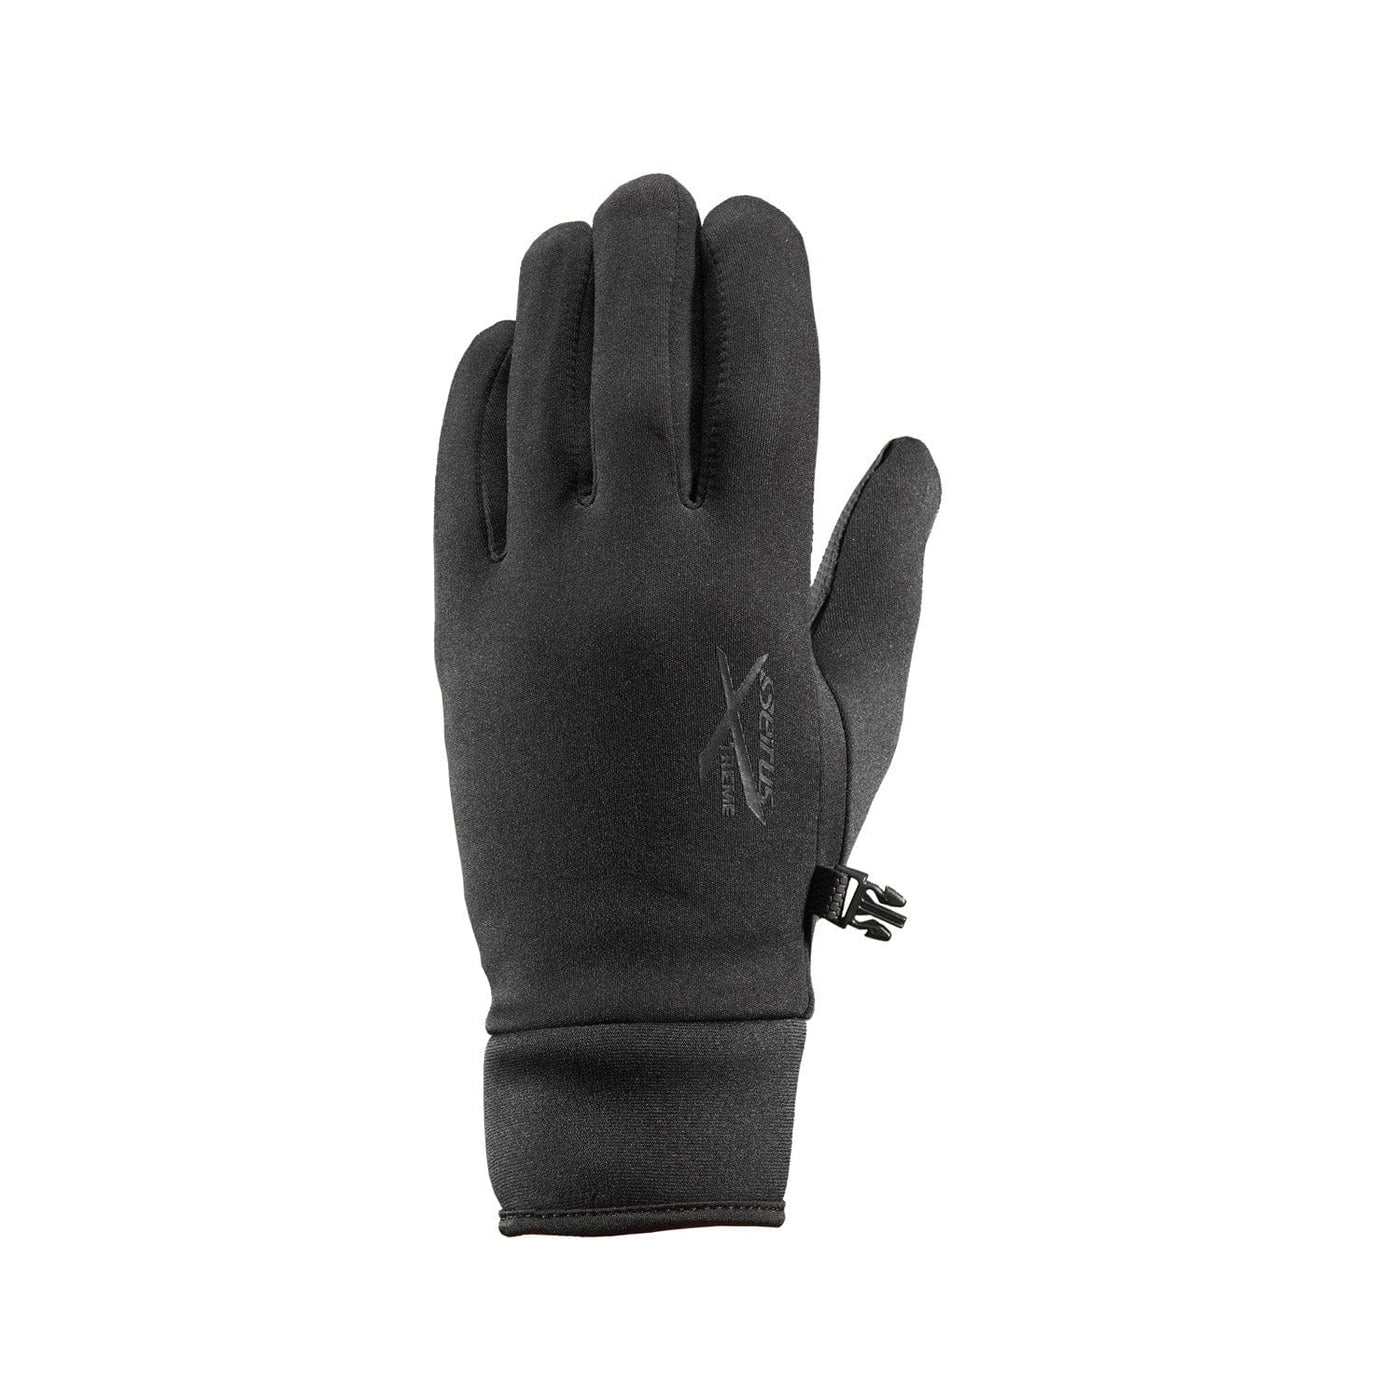 Seirus Seirus Xtreme All Weather Glove Mens Black XL MD Apparel